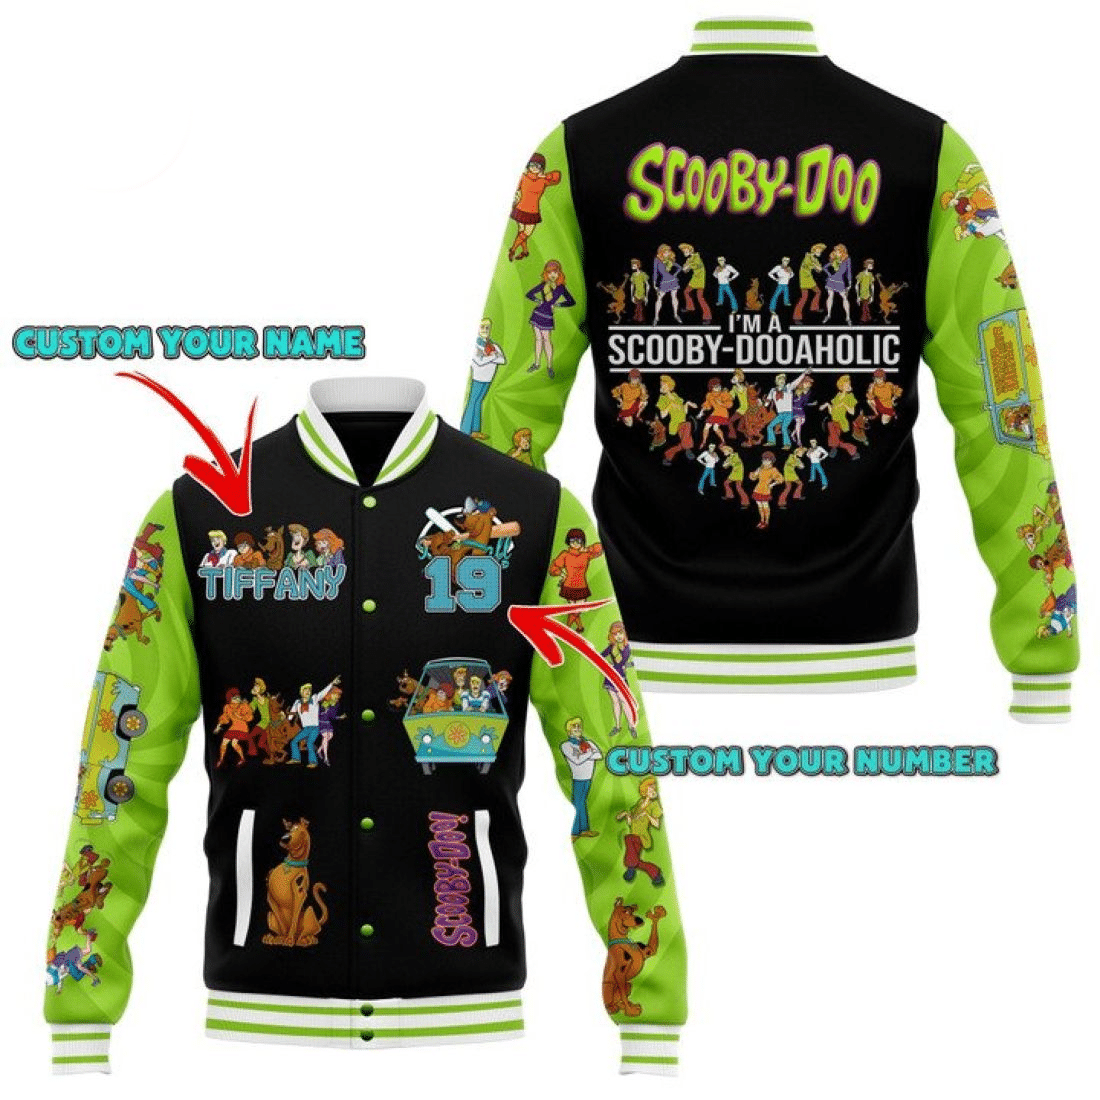 Buy Scooby Doo ,Scooby Dooaholic Personalized Varsity 377 Gift Lover ...